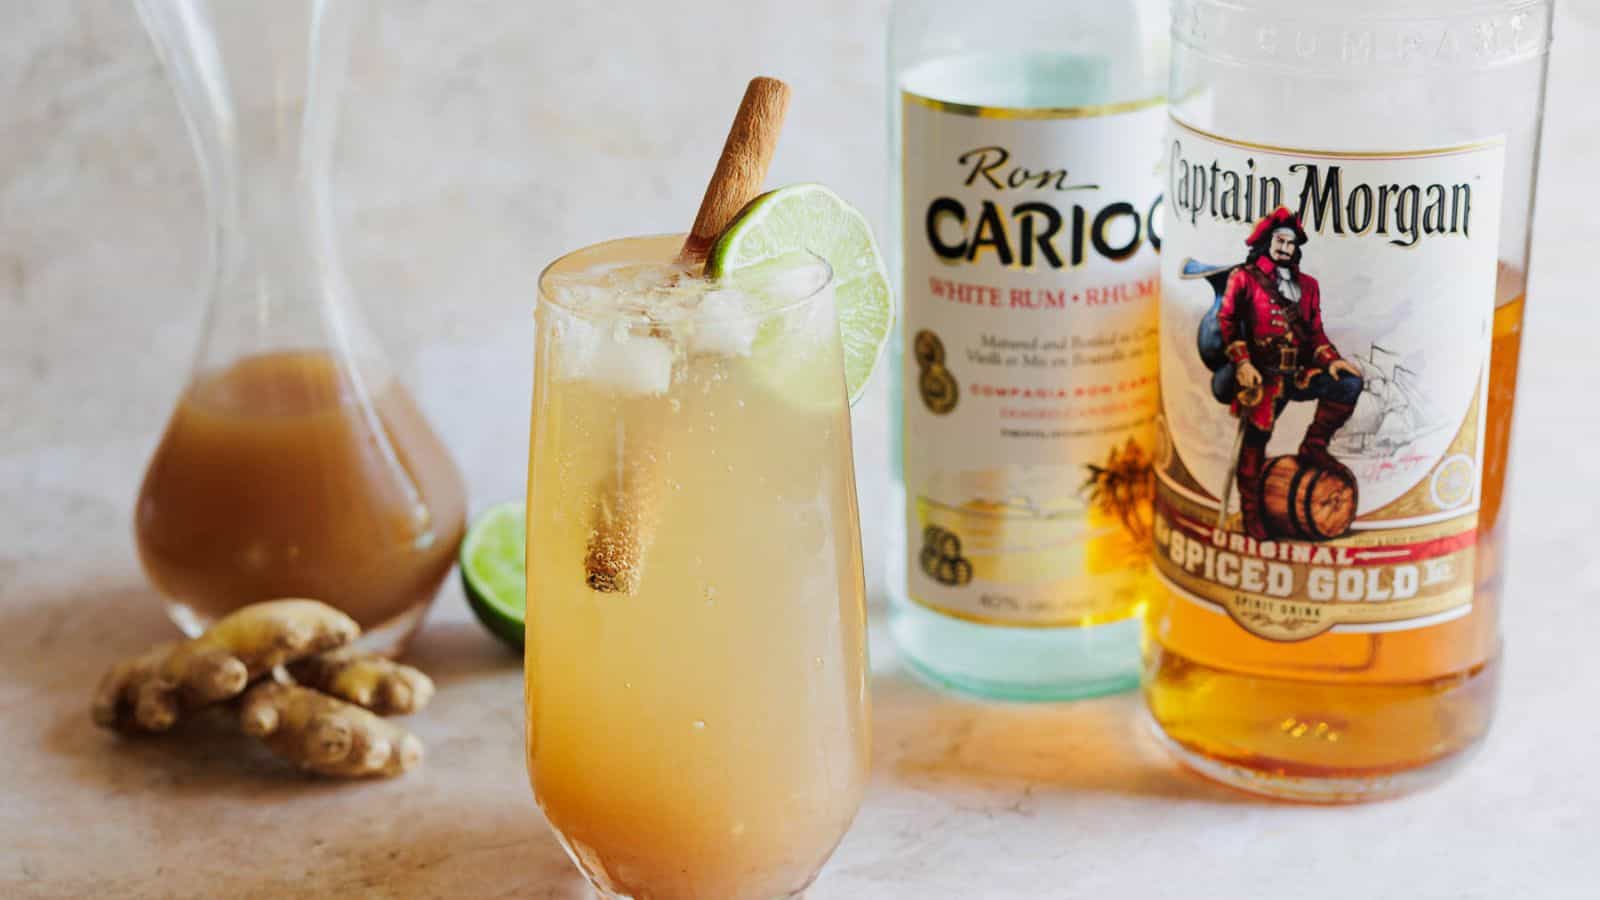 Tamarind cocktail with rum bottles in background.